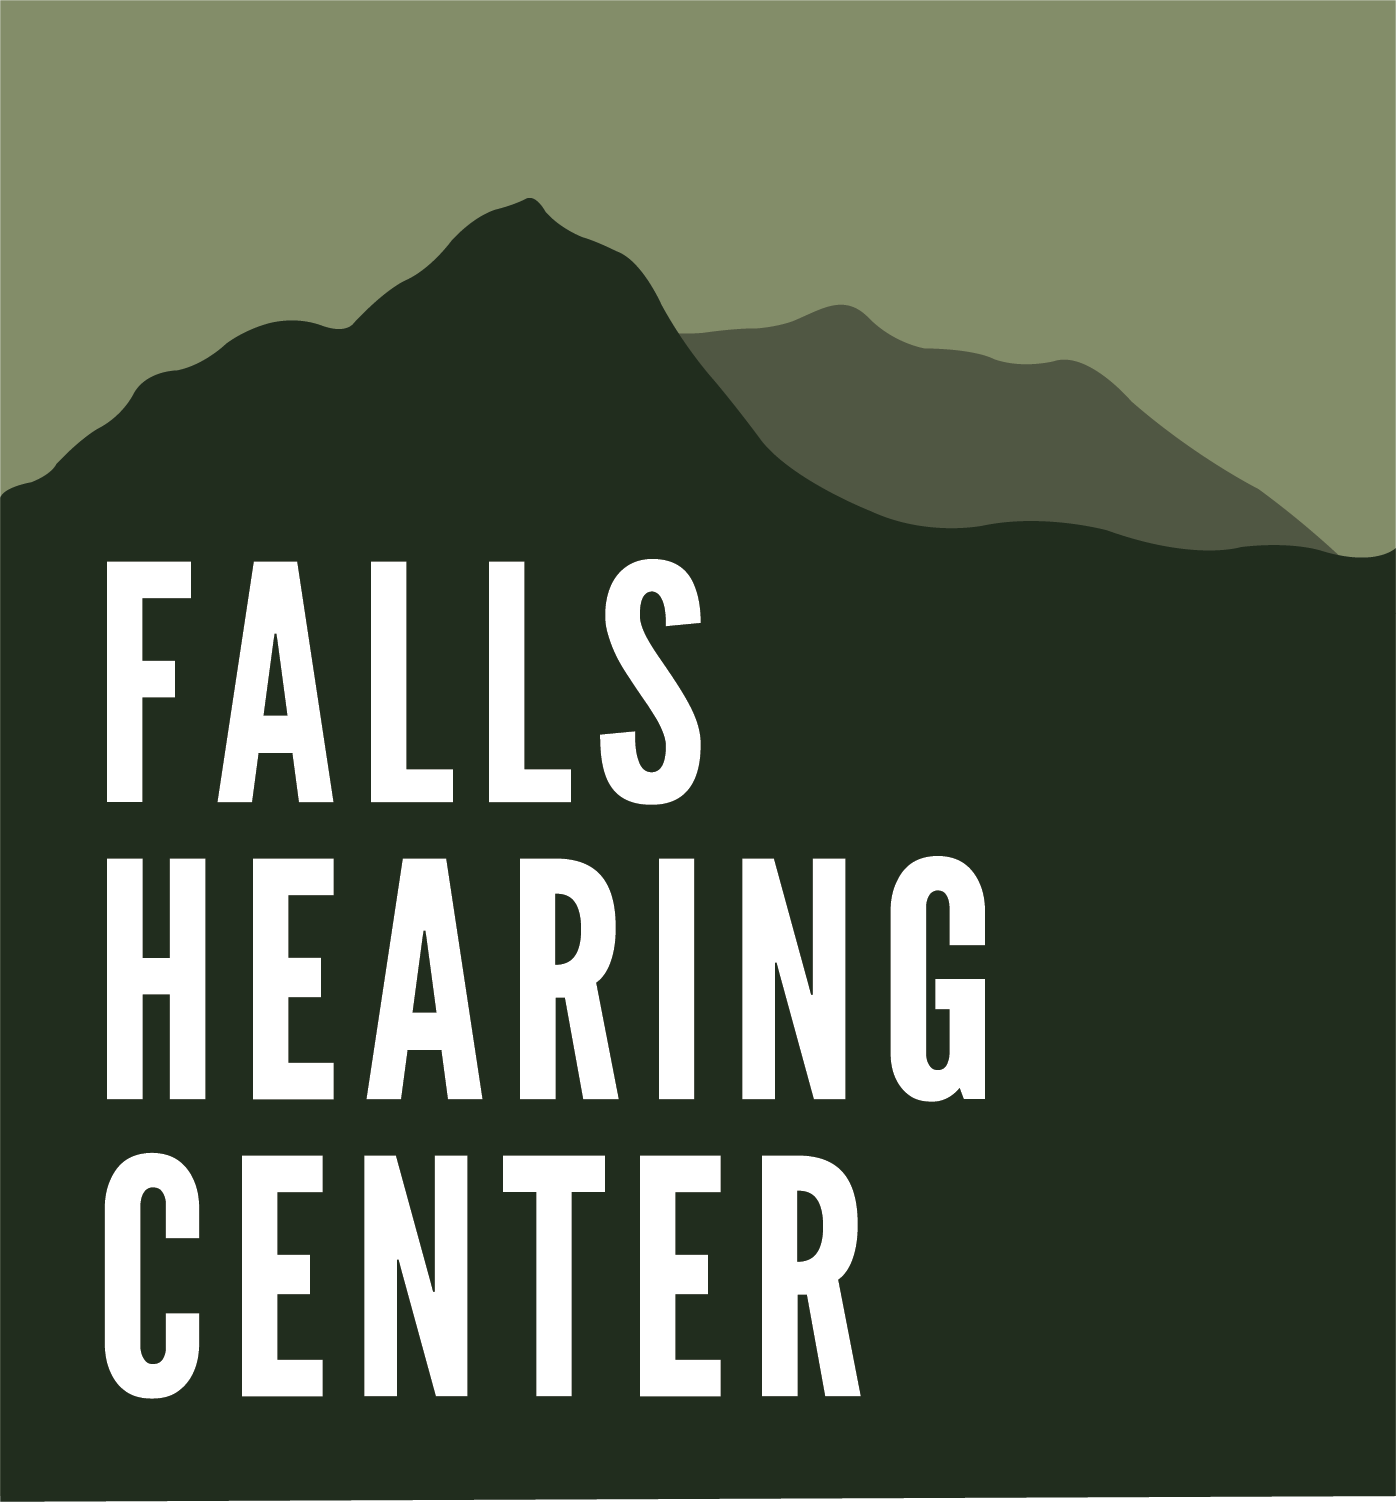 Falls Hearing Center